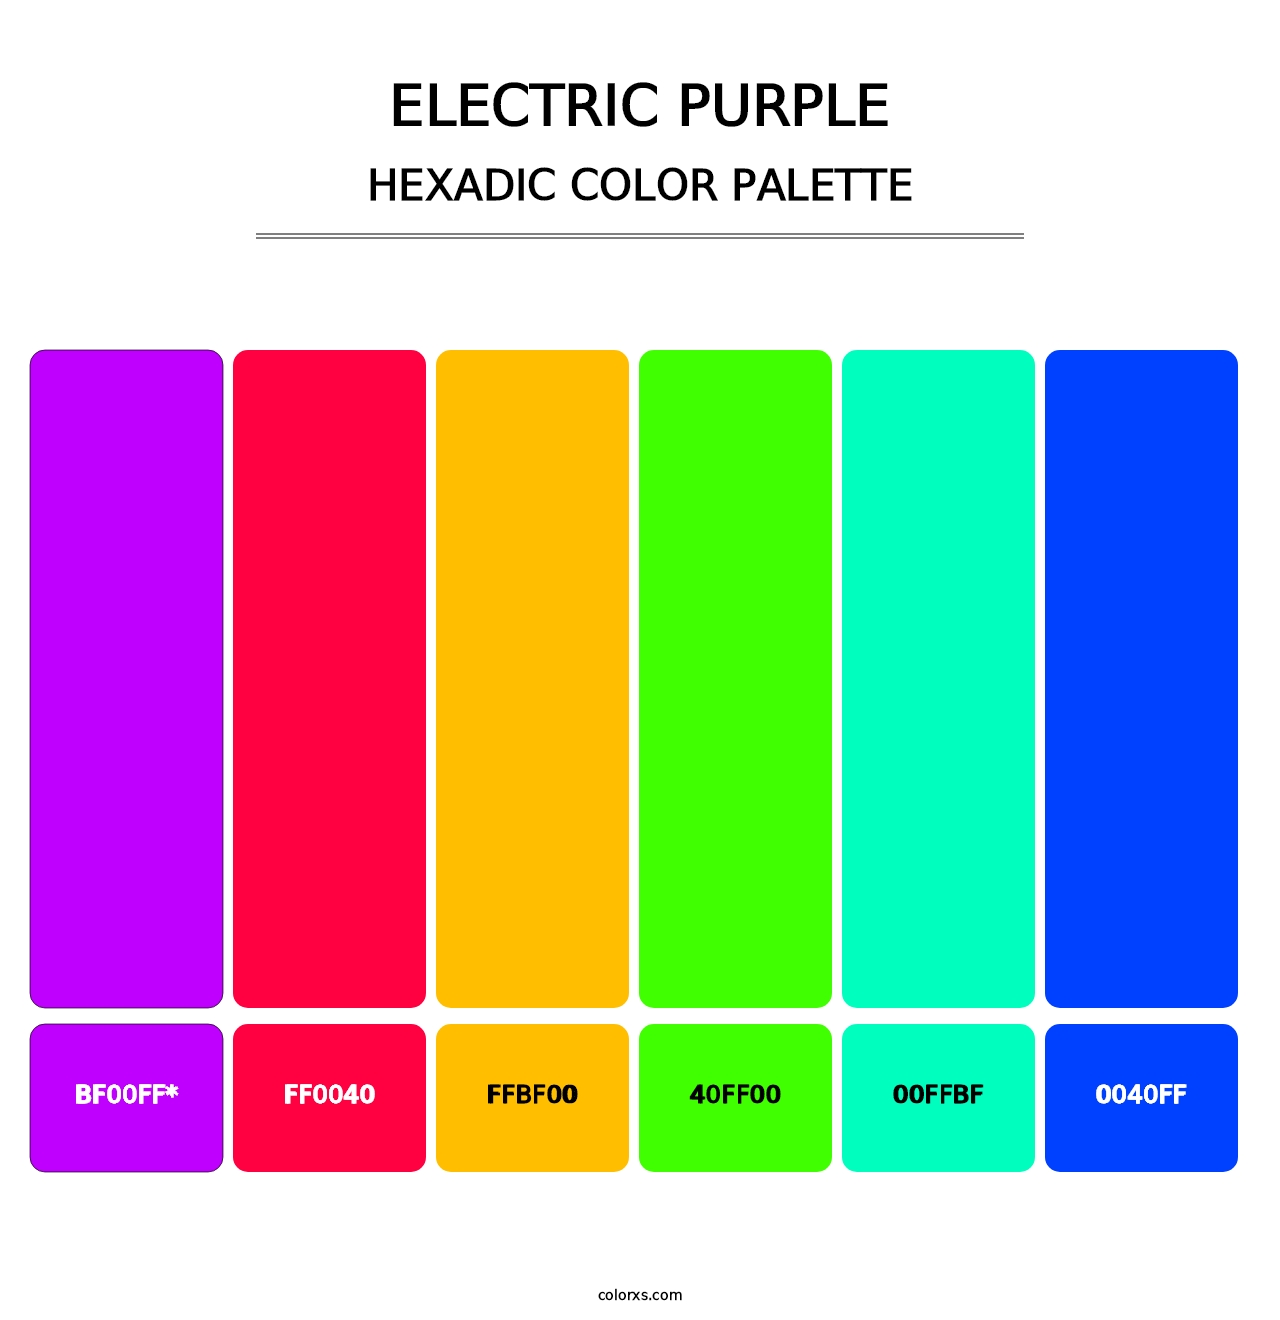 Electric Purple - Hexadic Color Palette